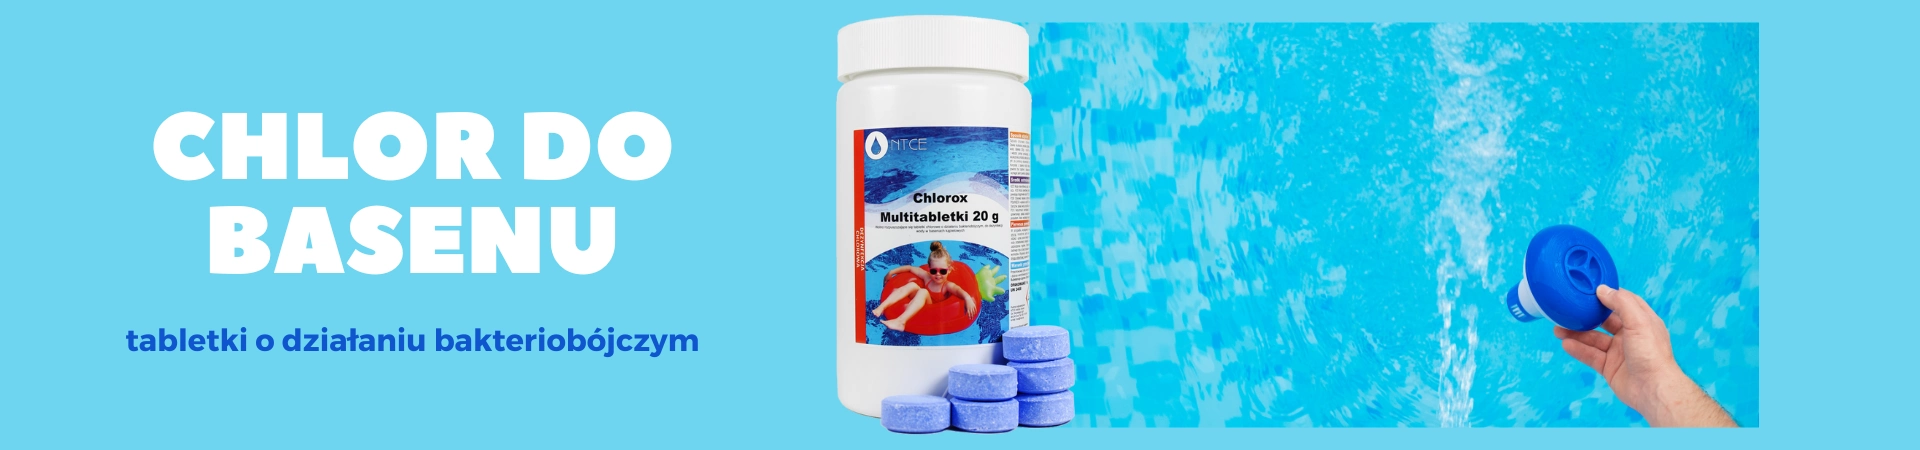 Chlor do basenu - tabletki multifunkcyjne